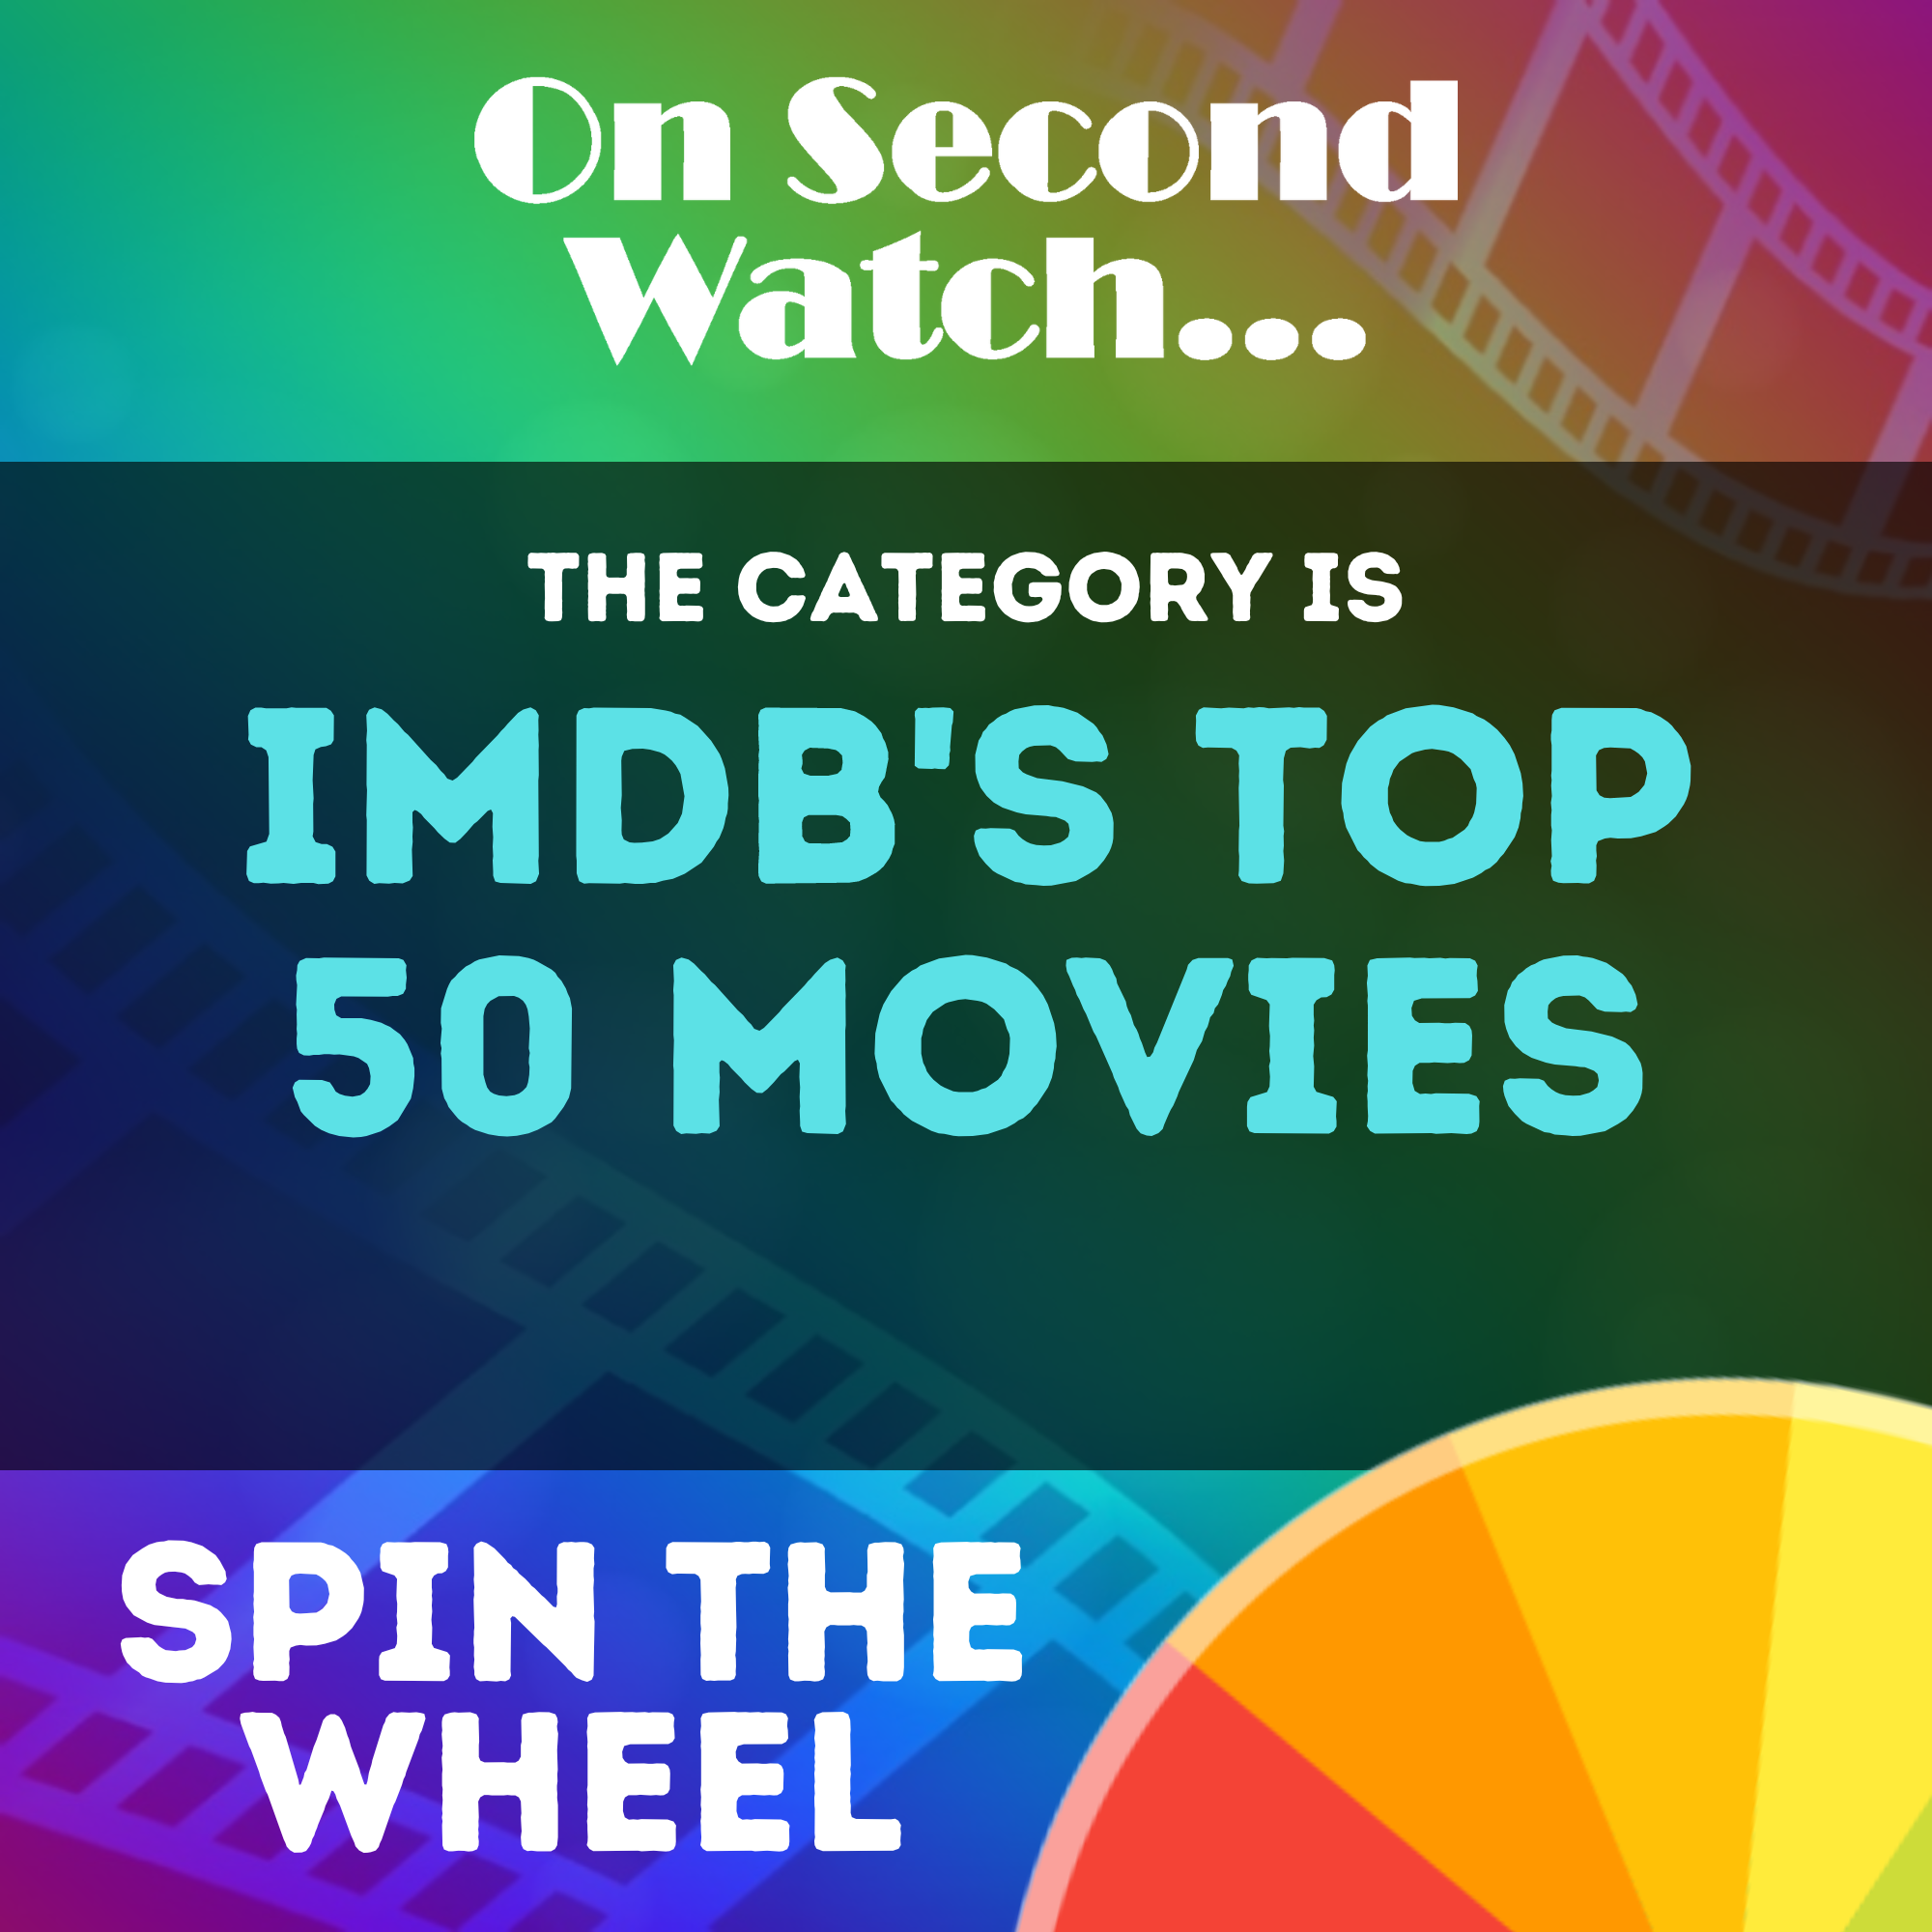 IMDb’s Top 50 Movies